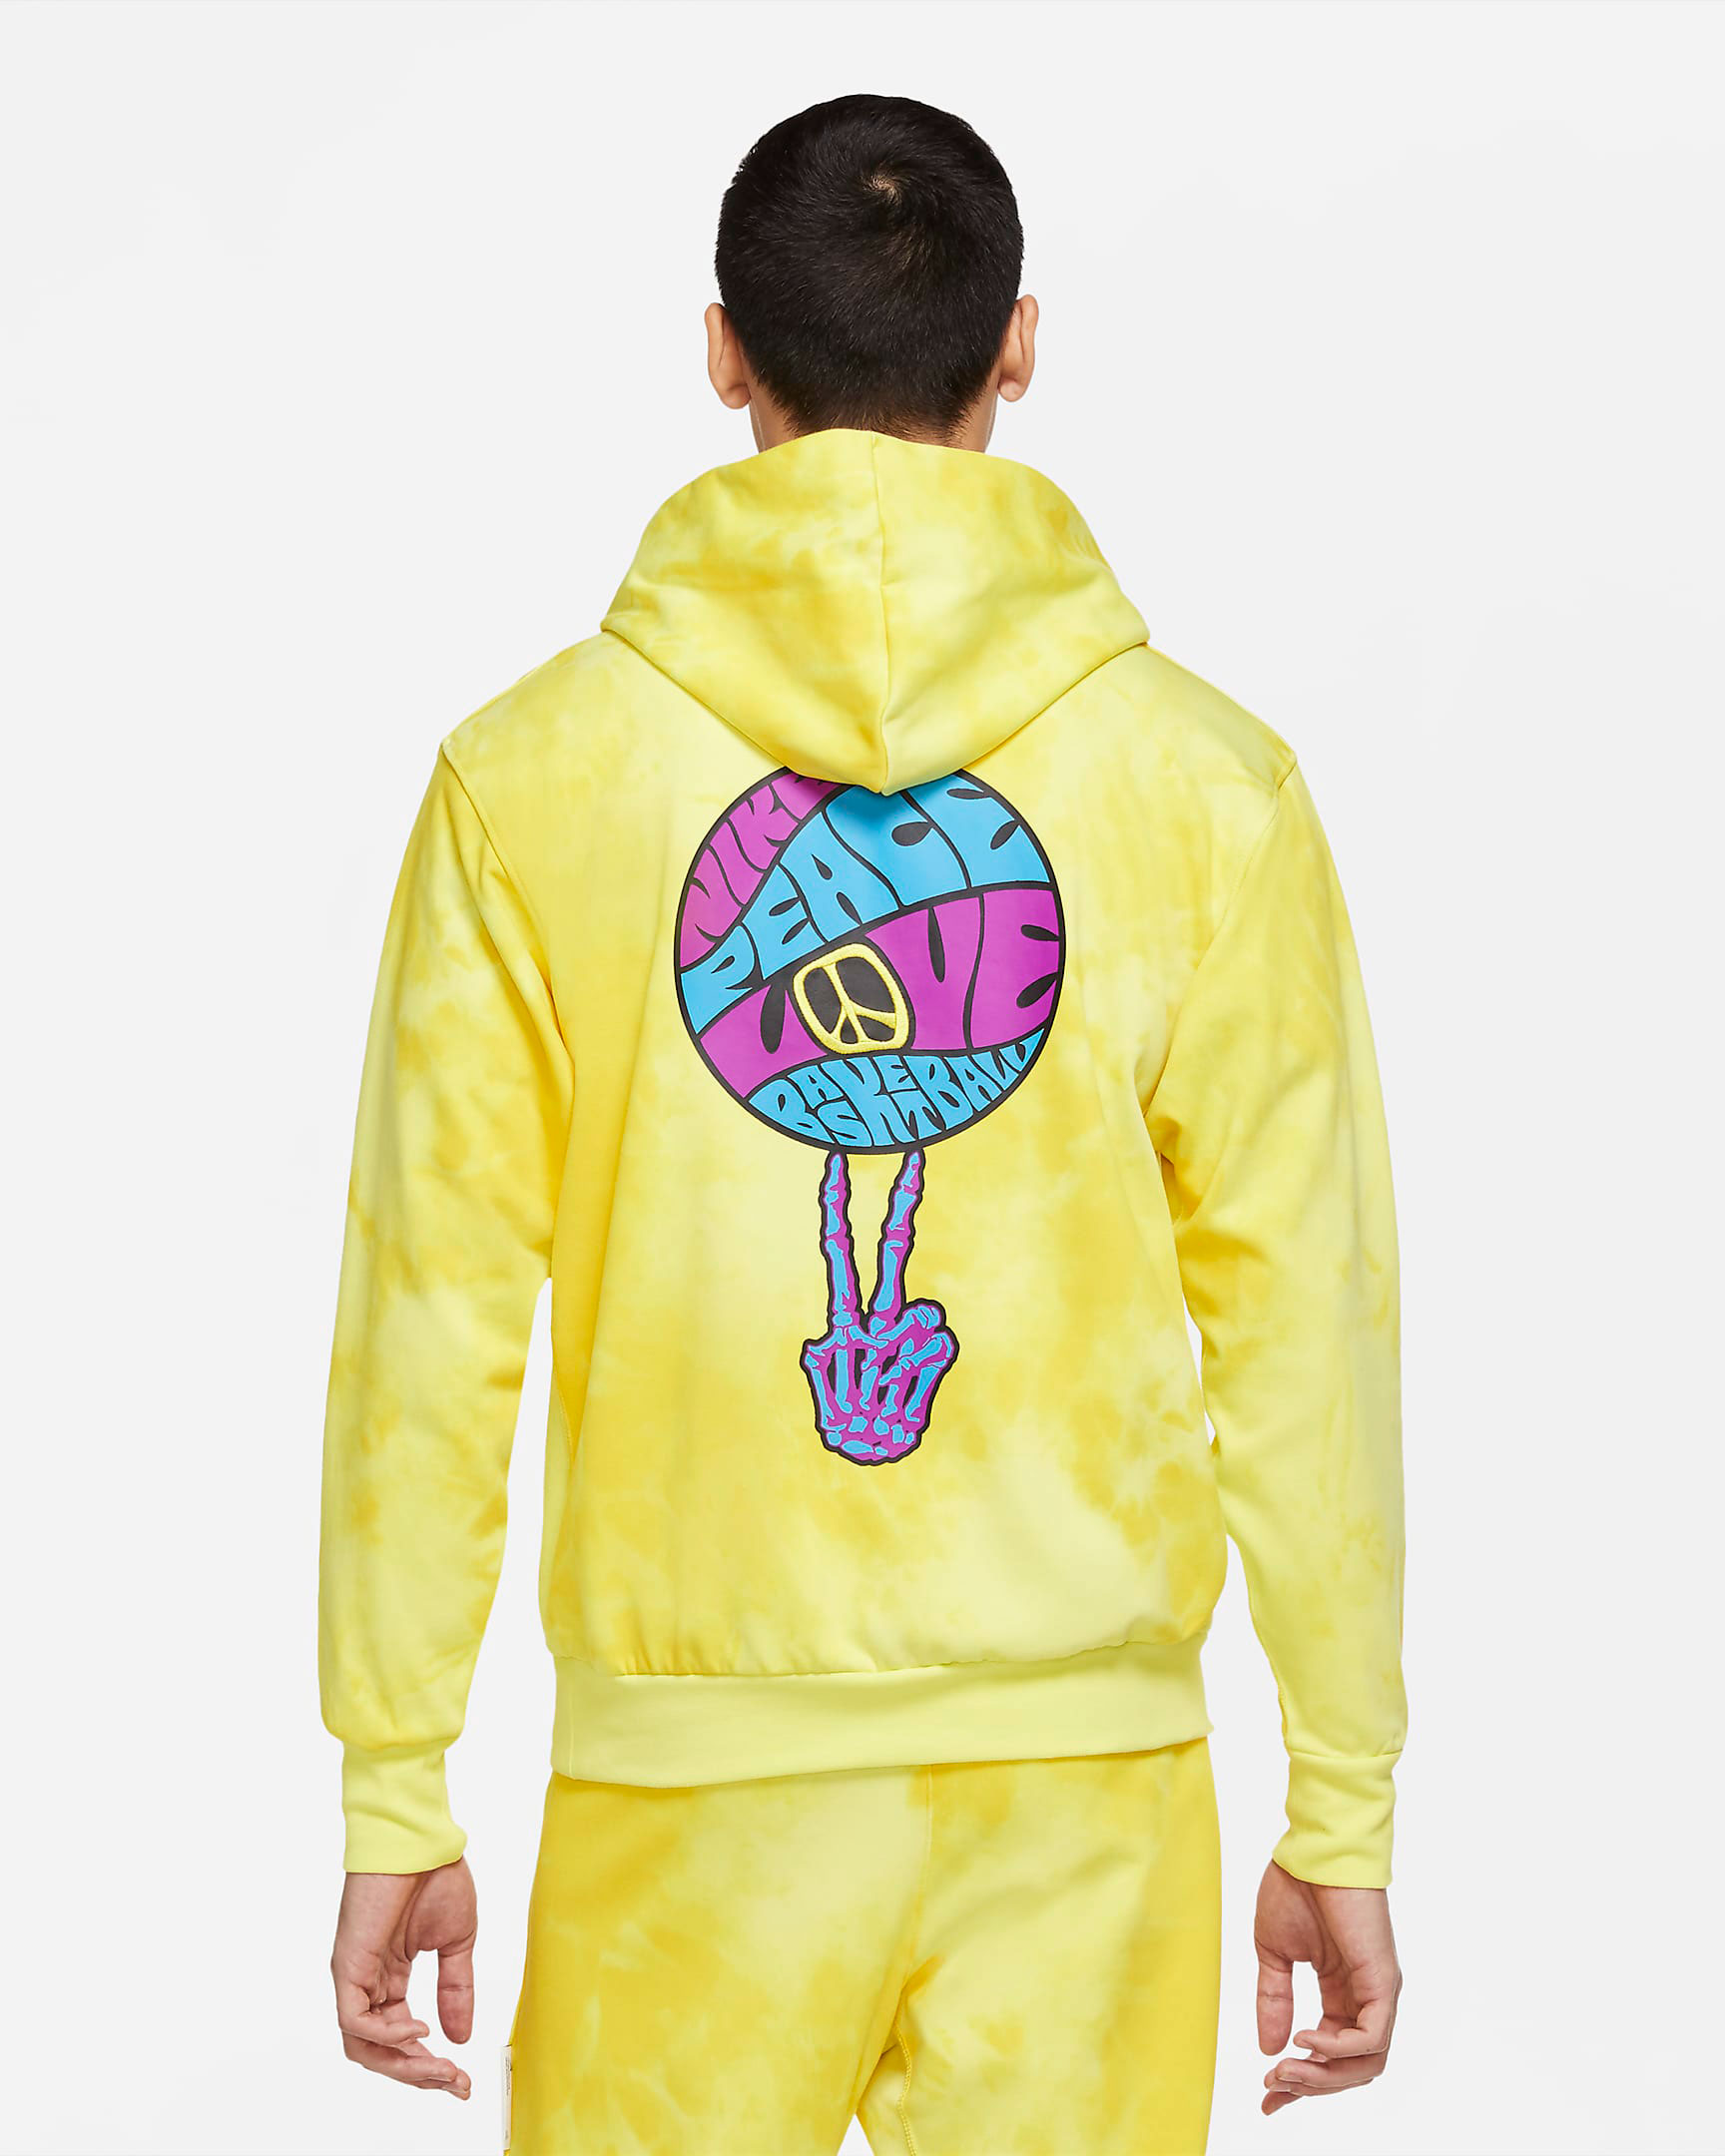 nike-peace-love-basketball-hoodie-yellow-2